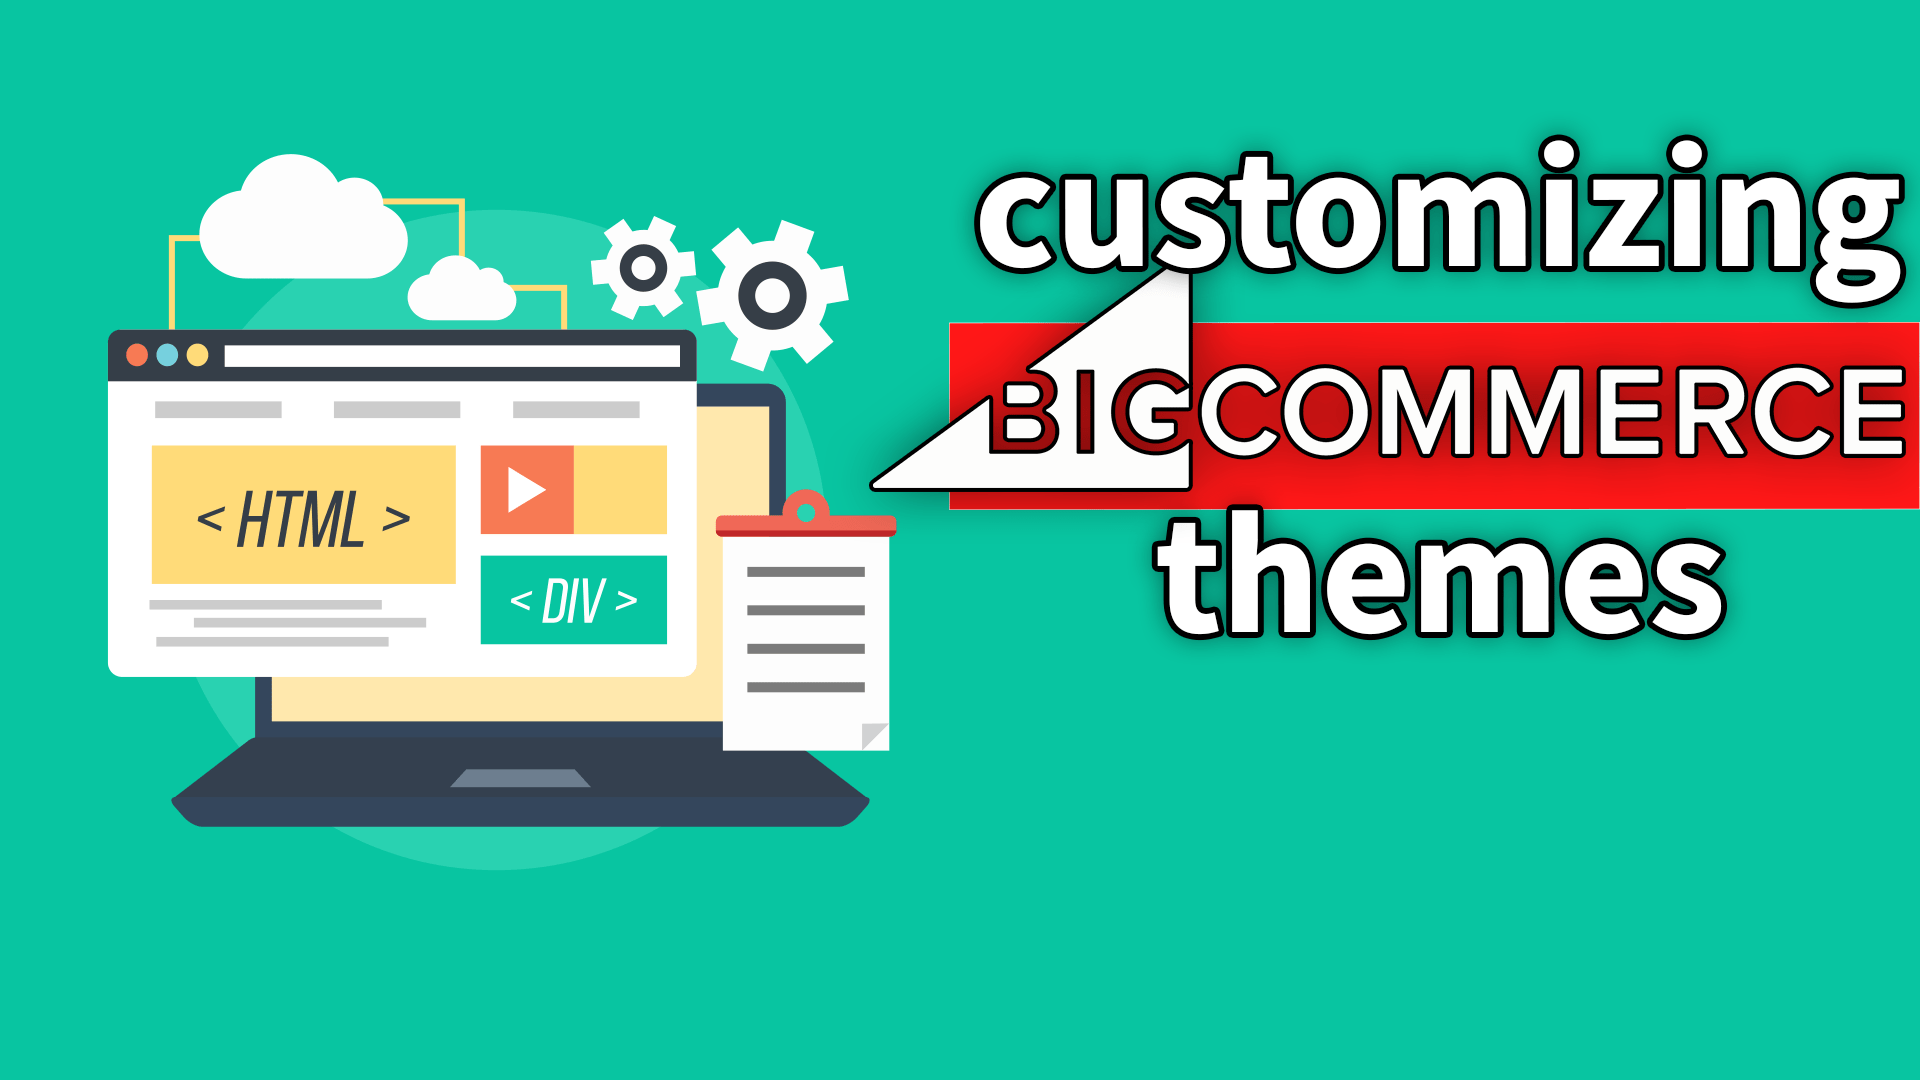 Customizing BigCommerce Templates To Maximize Conversions